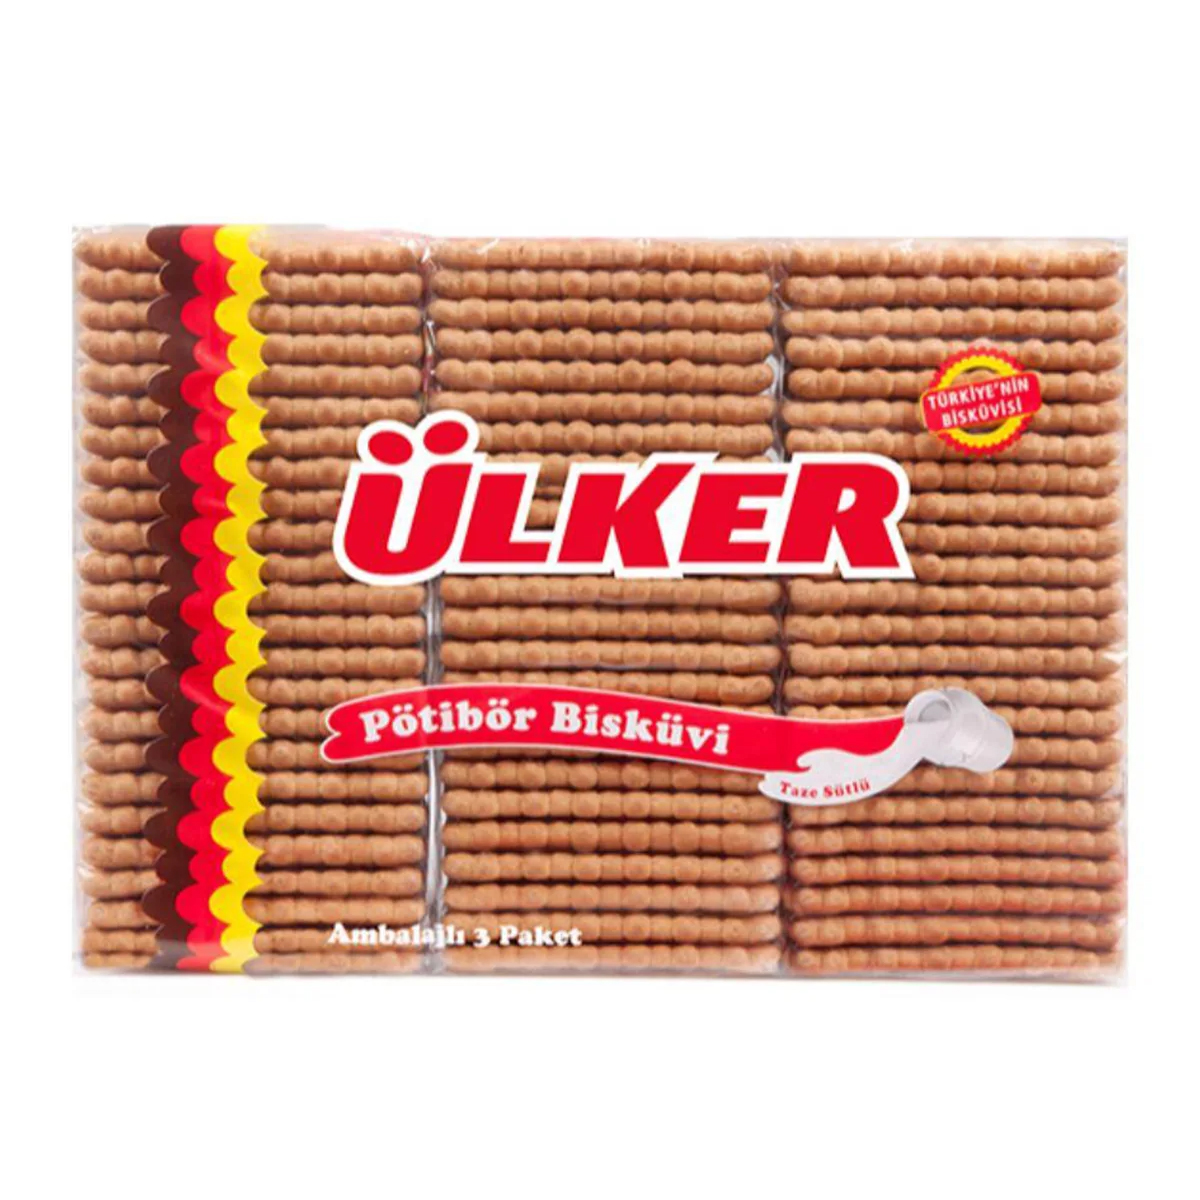 Печенье Ulker Petit Beurre двойной обжарки, 450 г печенье ulker petit beurre с шоколадом 175 г